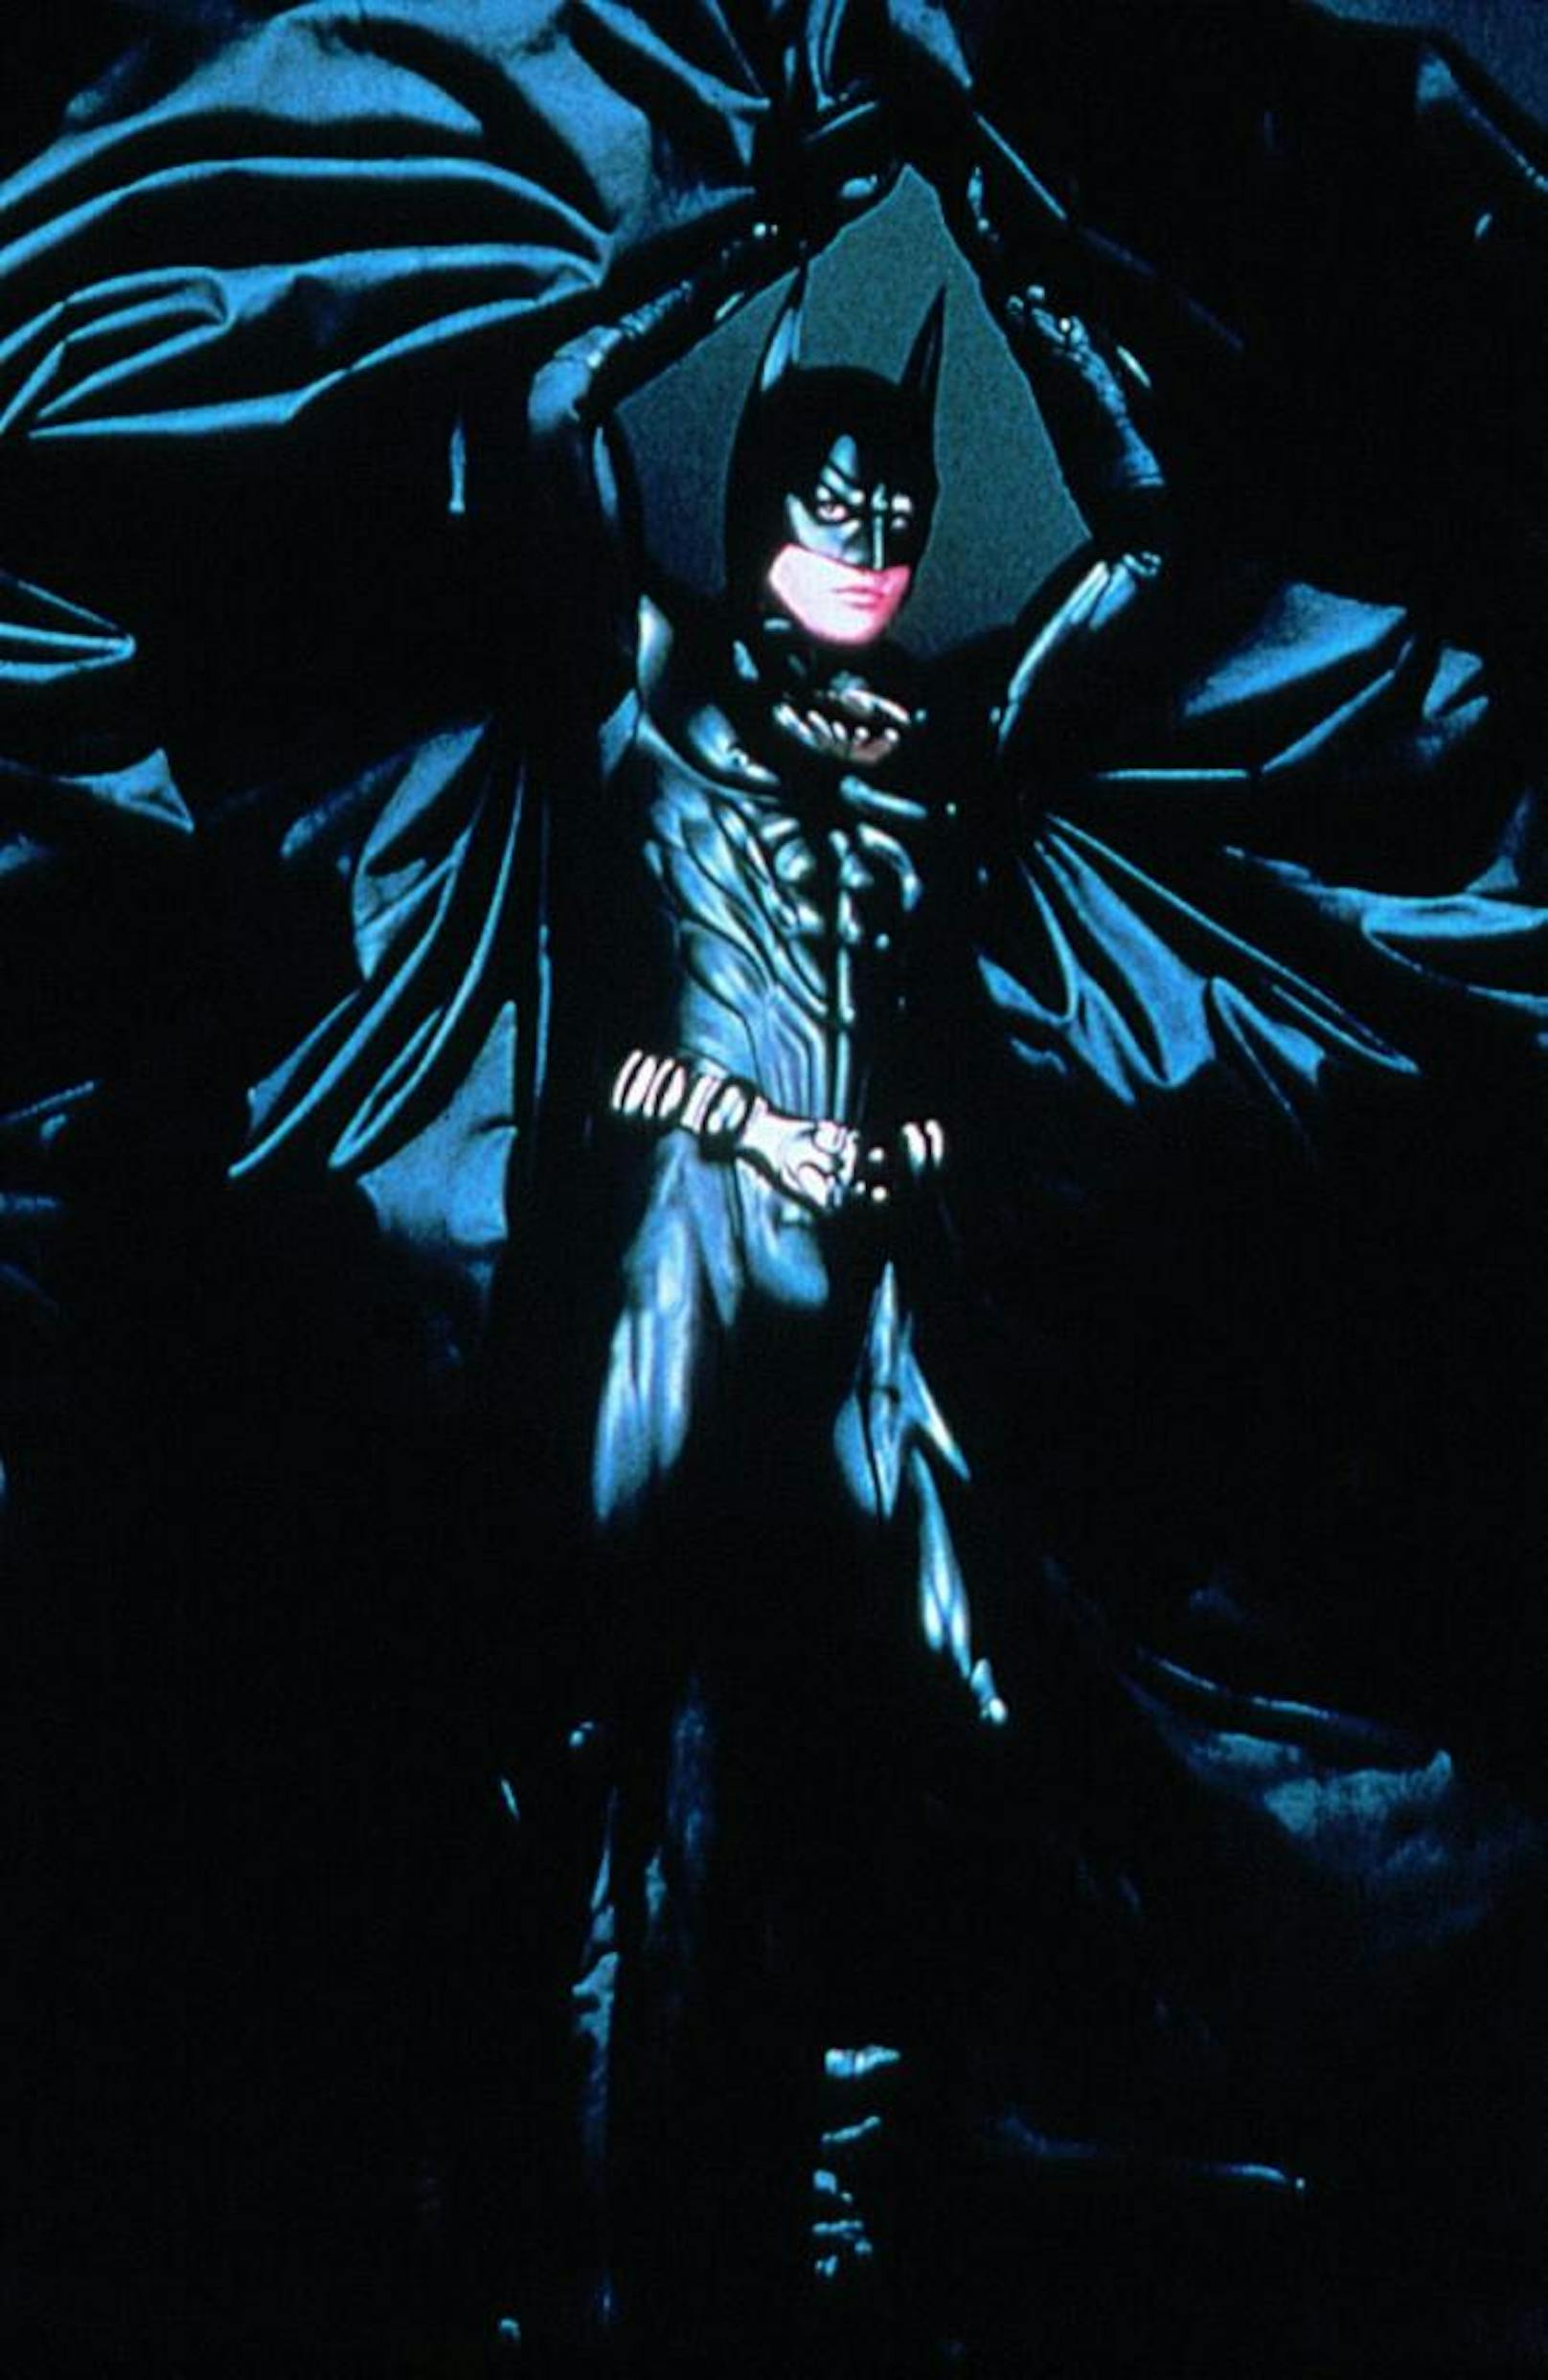 Val Kilmer als Batman in "Batman Forever"